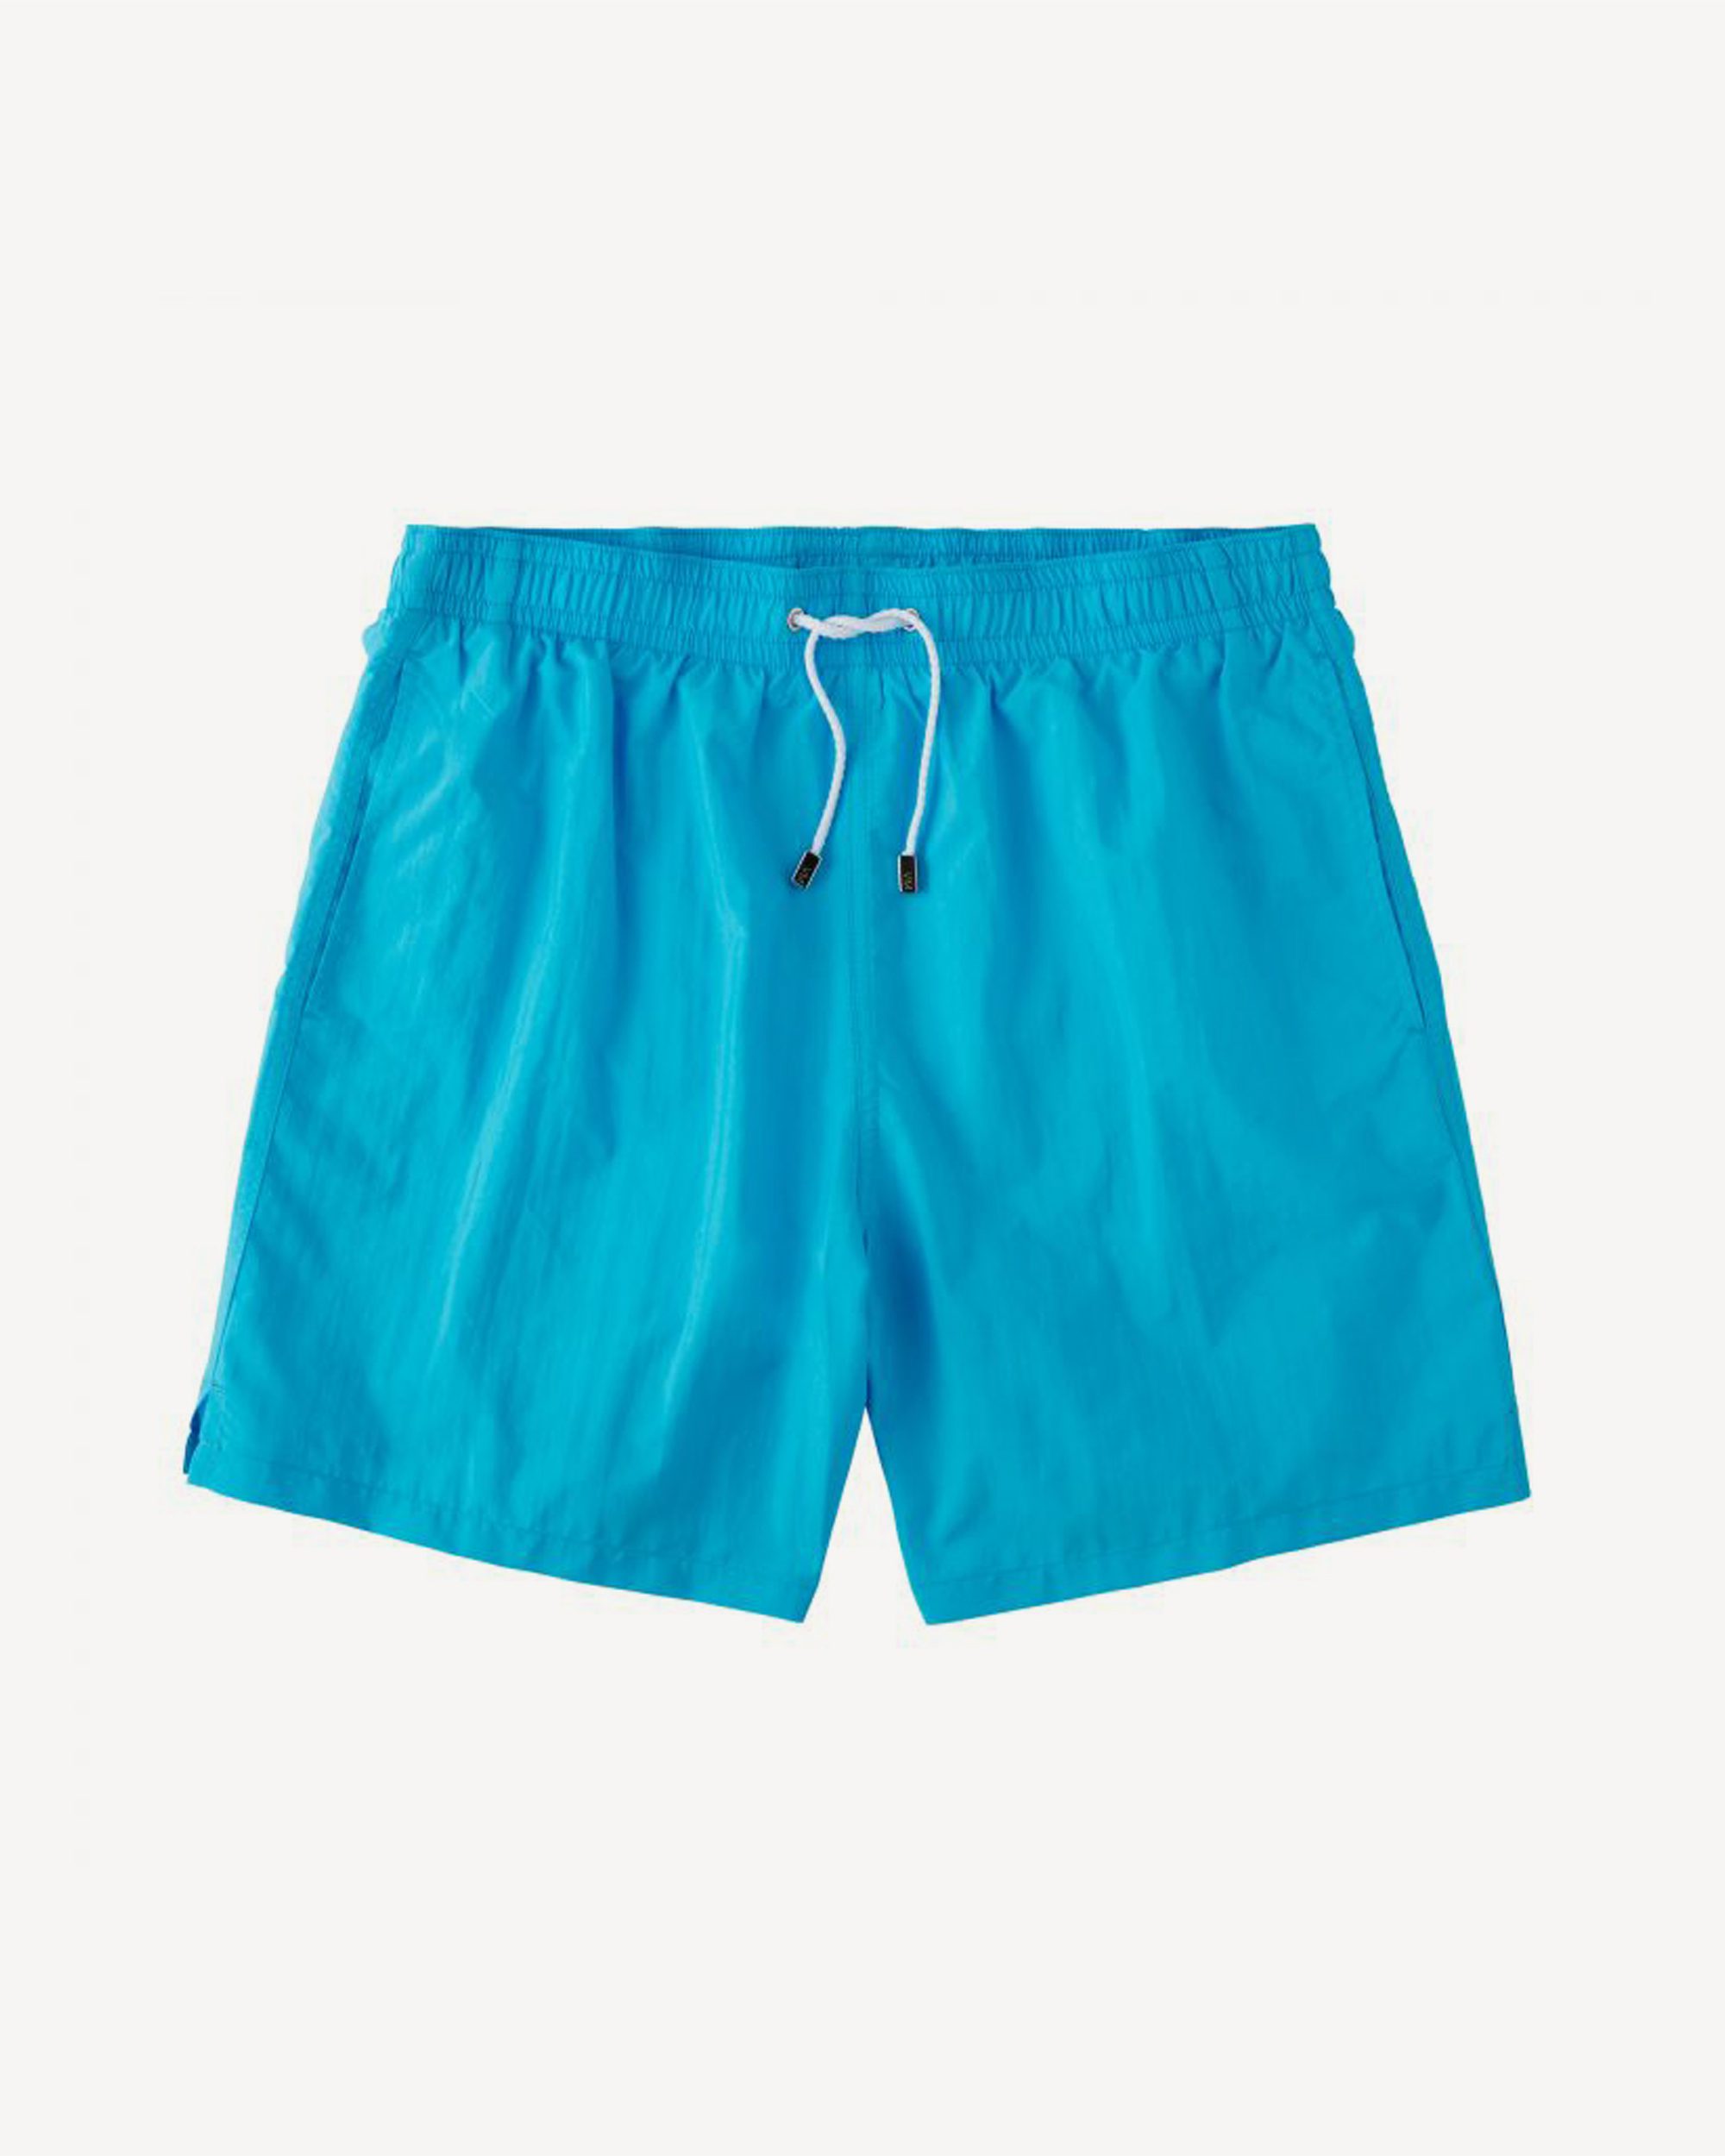 Classic Solid Swimtrunks - Turquoise Classic Solid Swimtrunks - Turquoise